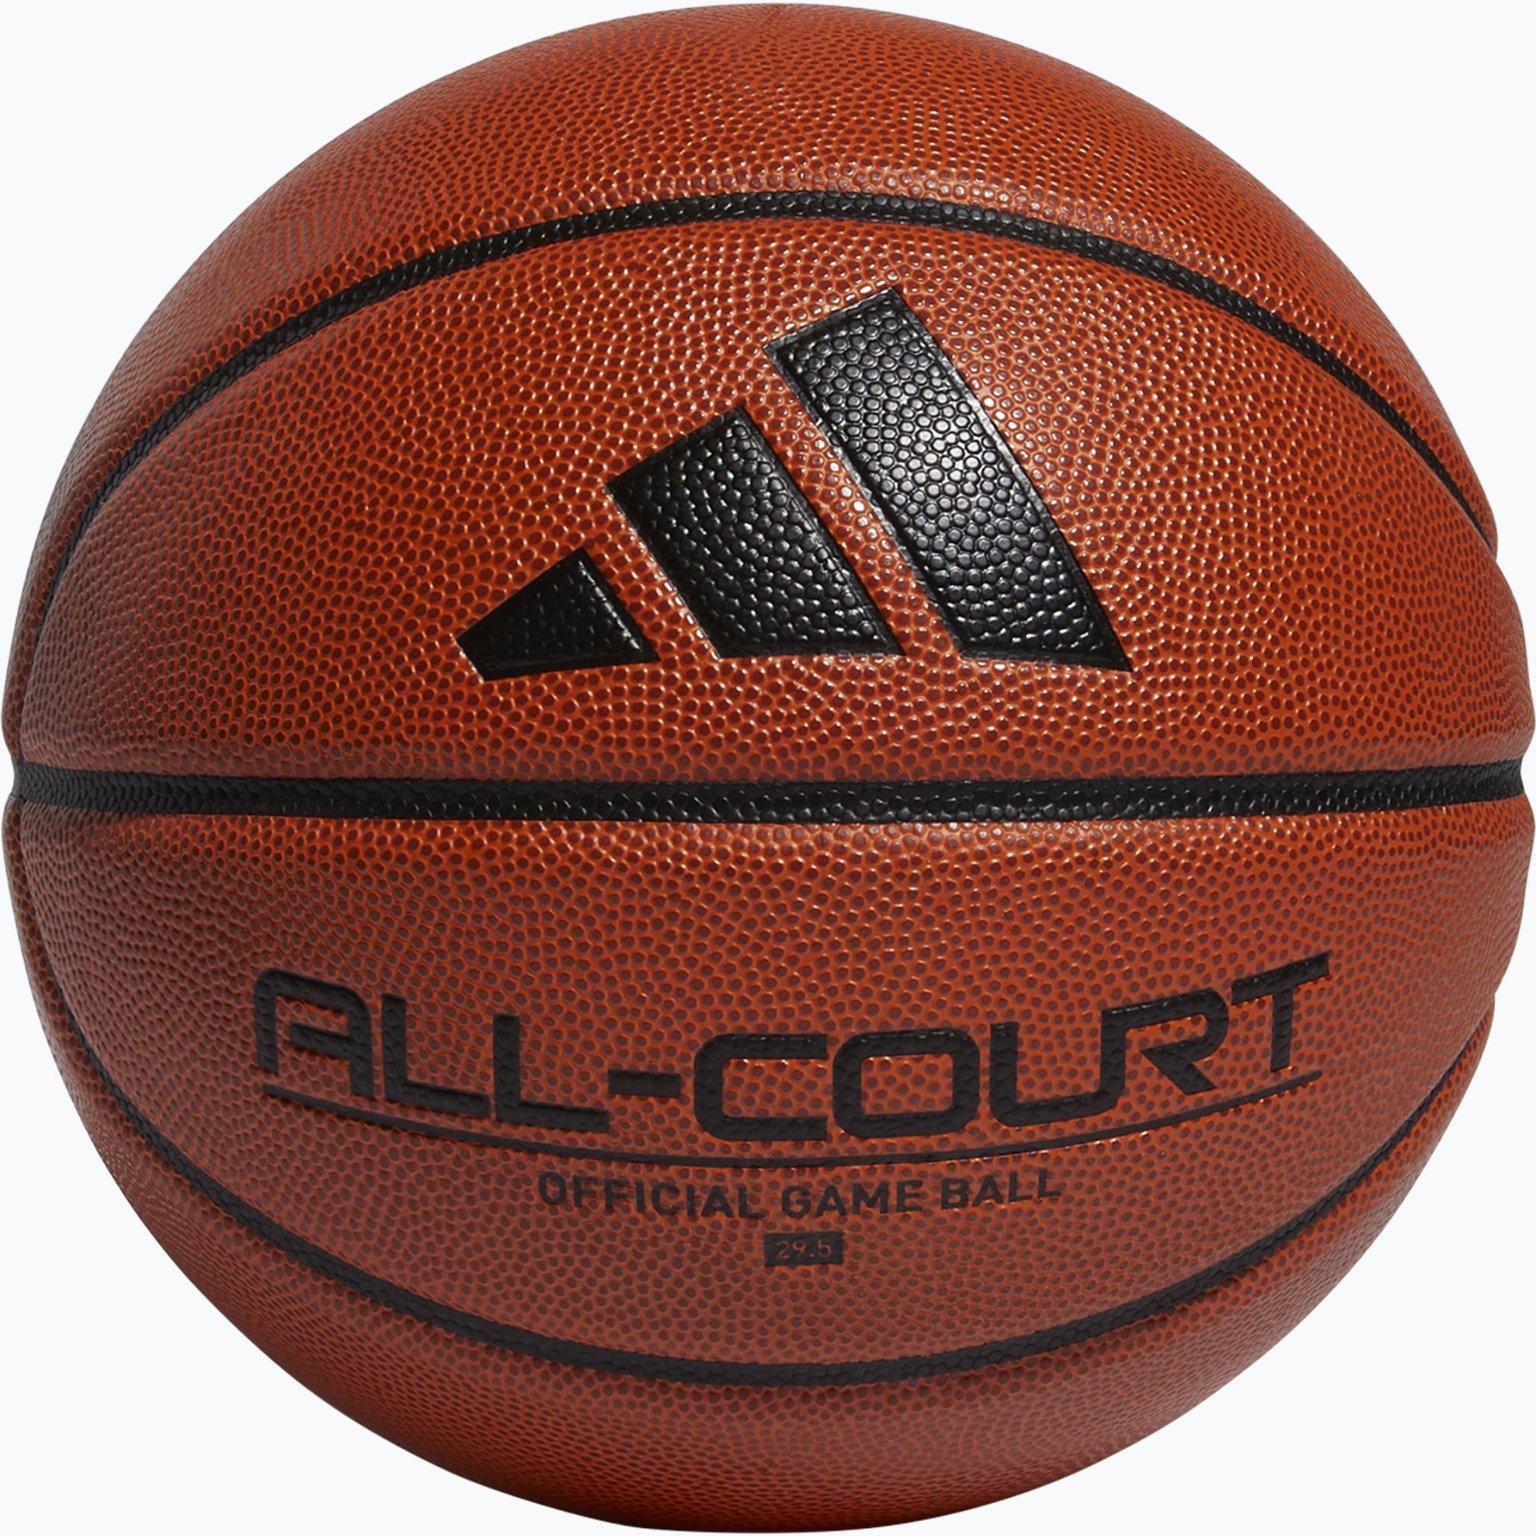 All Court 3.0 basketboll